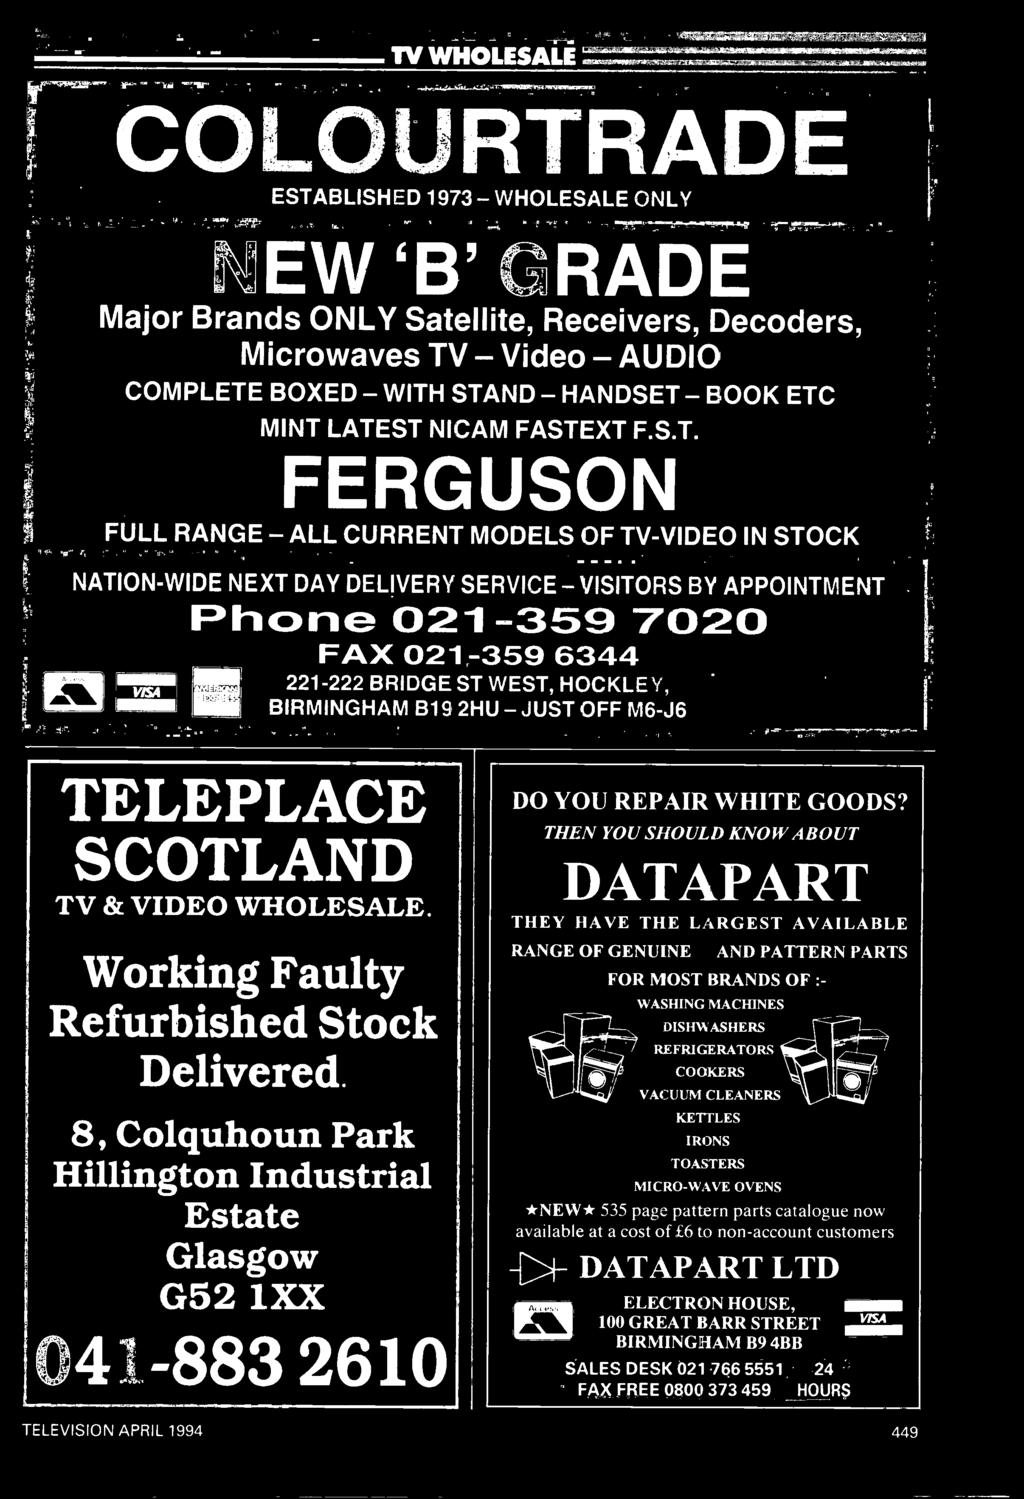 8, Colquhoun Park Hillington Industrial Estate Glasgow G52 1XX 041-883 2610 DO YOU REPAIR WHITE GOODS?